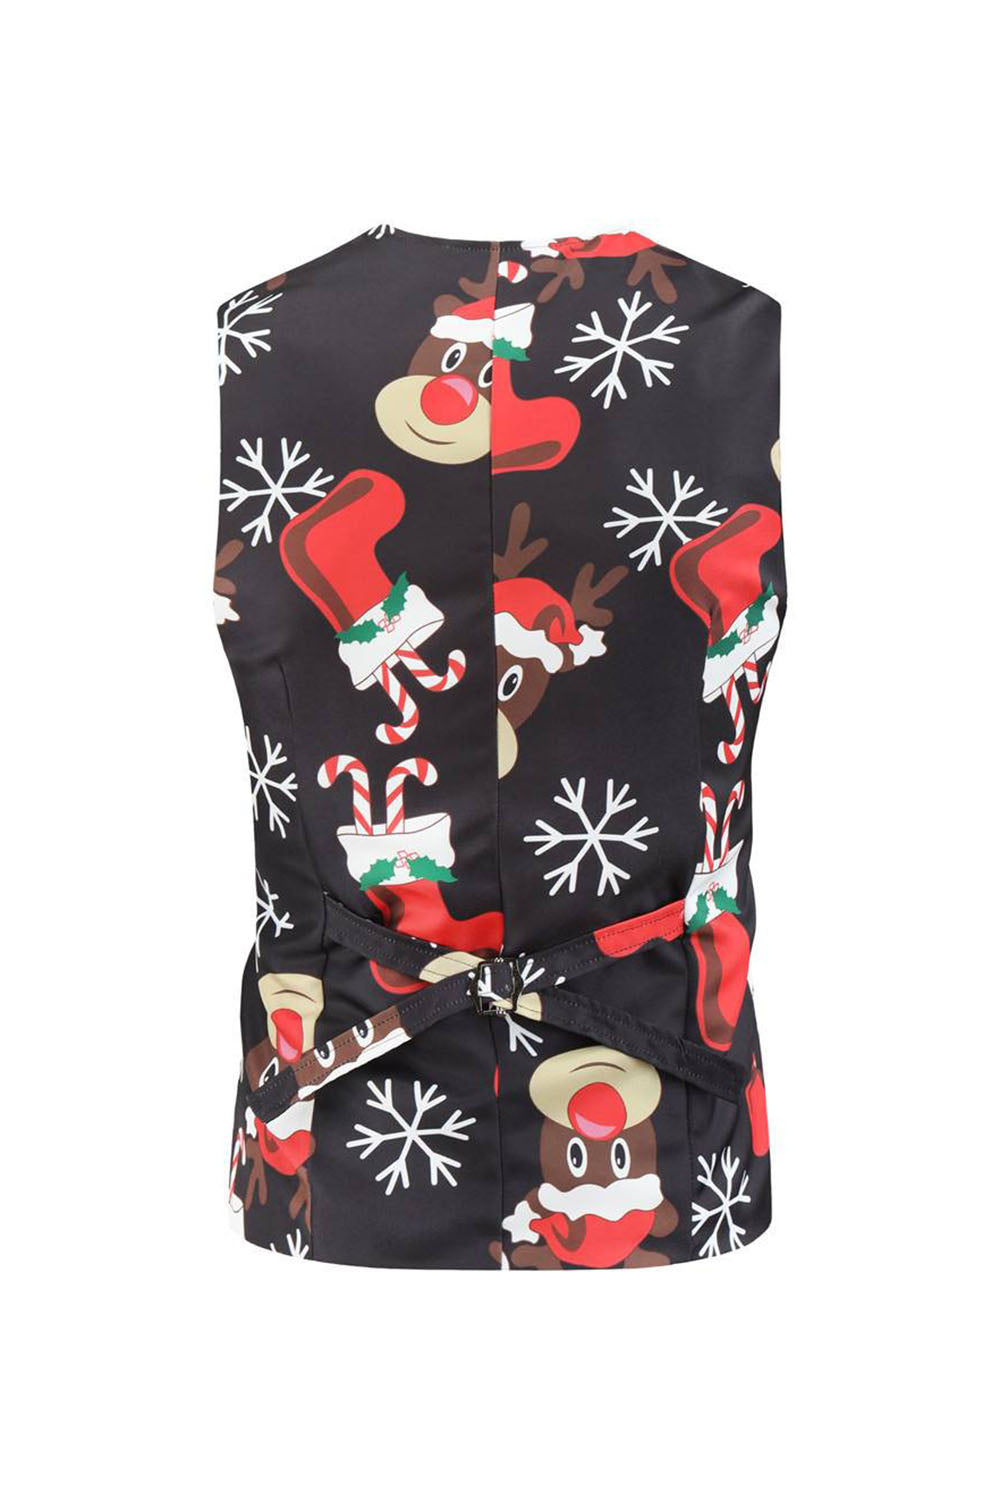 Black Printed 3 Piece Christmas Men's Suits